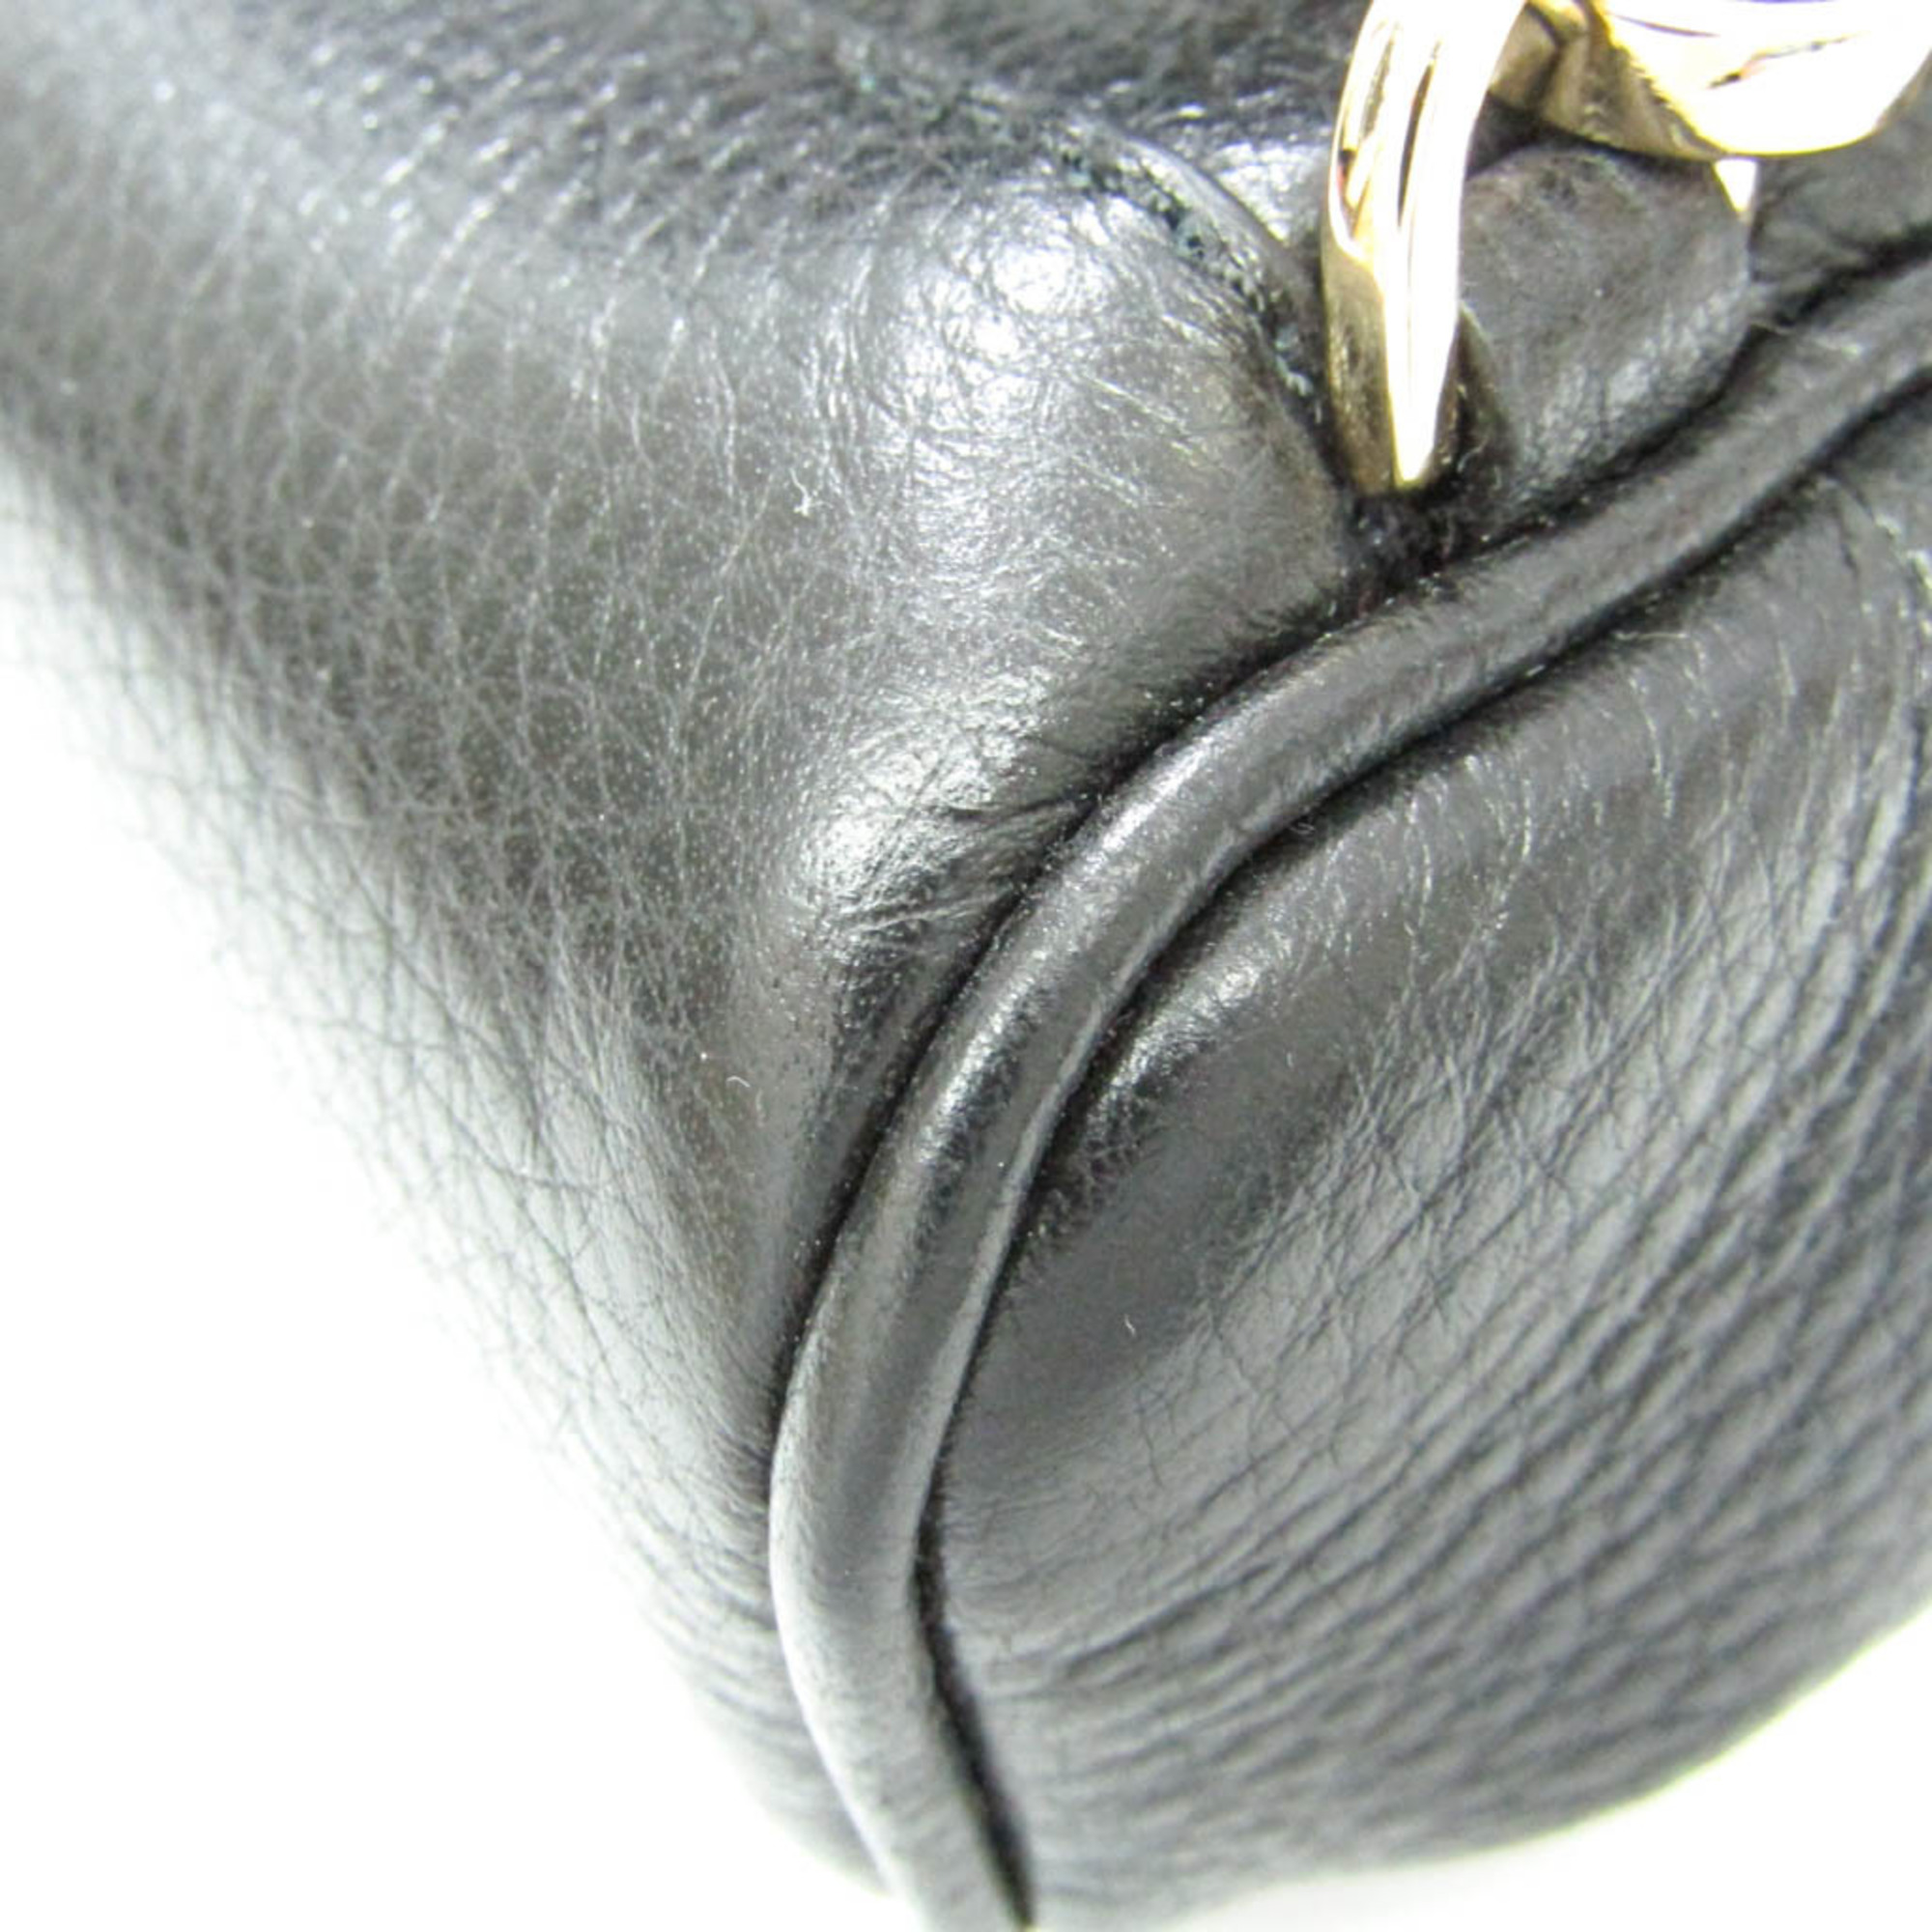 Michael Kors 30T6GEZB1L 001 Women's Leather Backpack Black